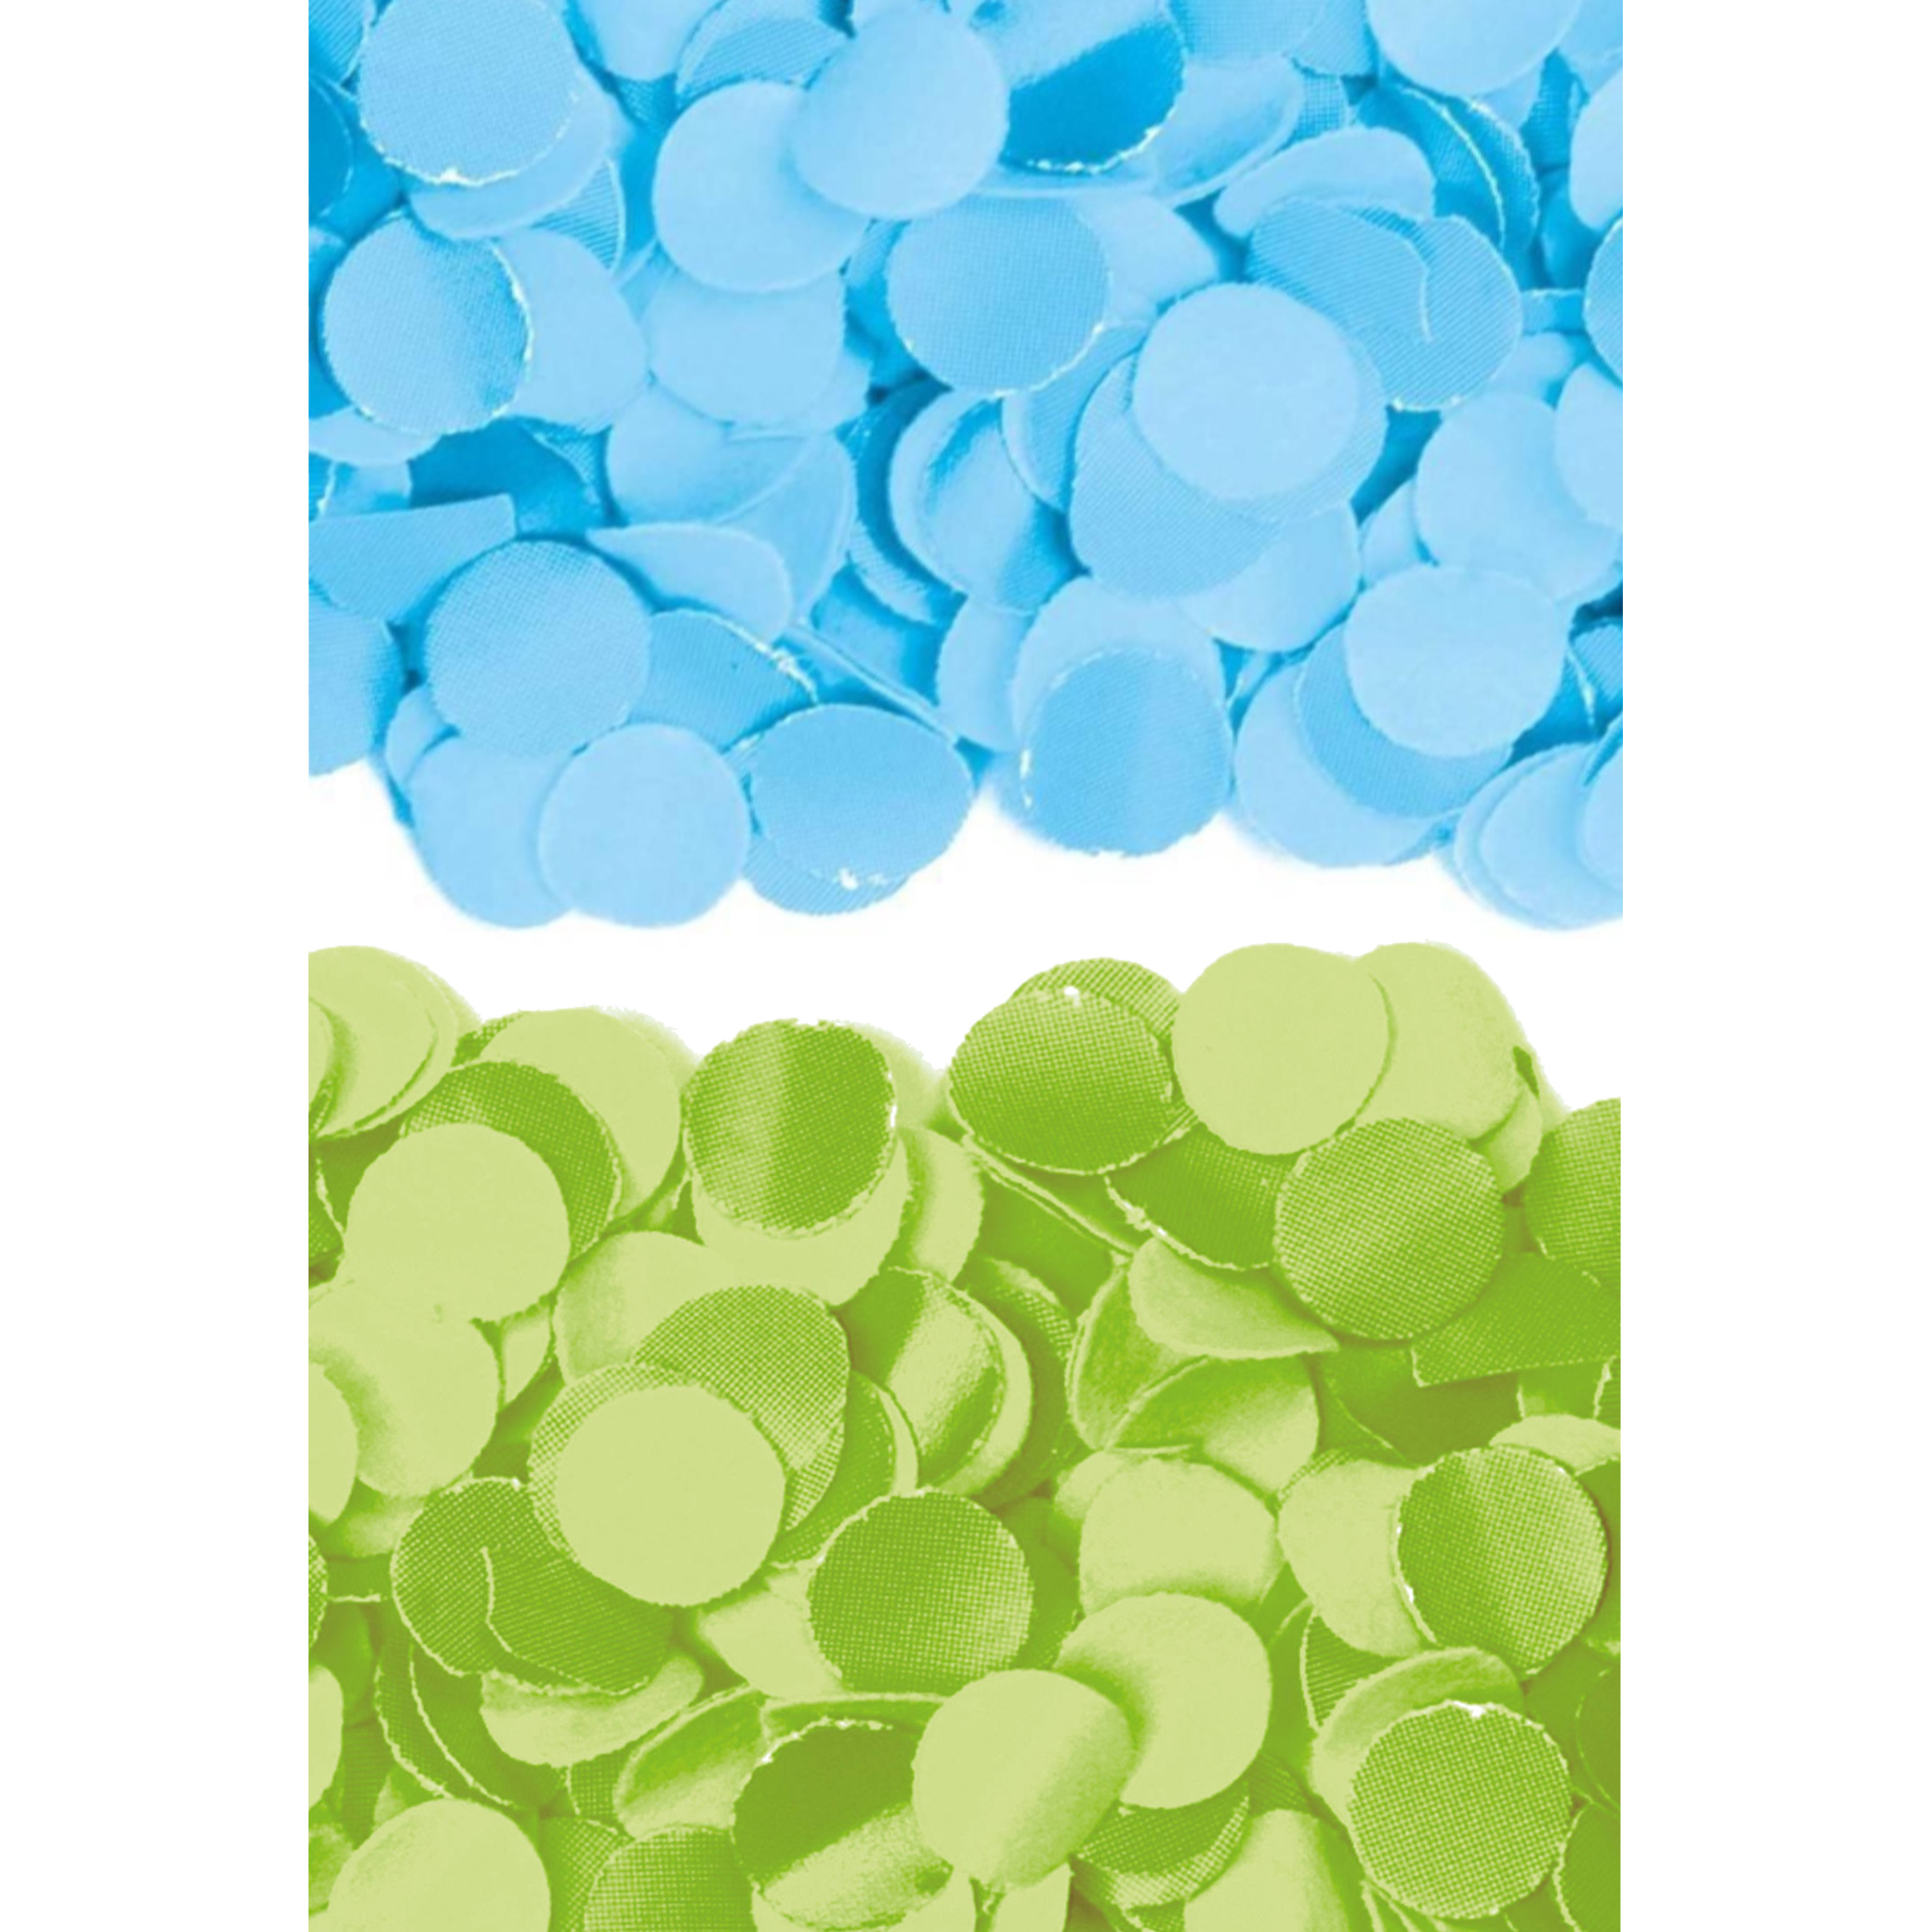 400 gram groen en blauwe papier snippers confetti mix set feest versiering -